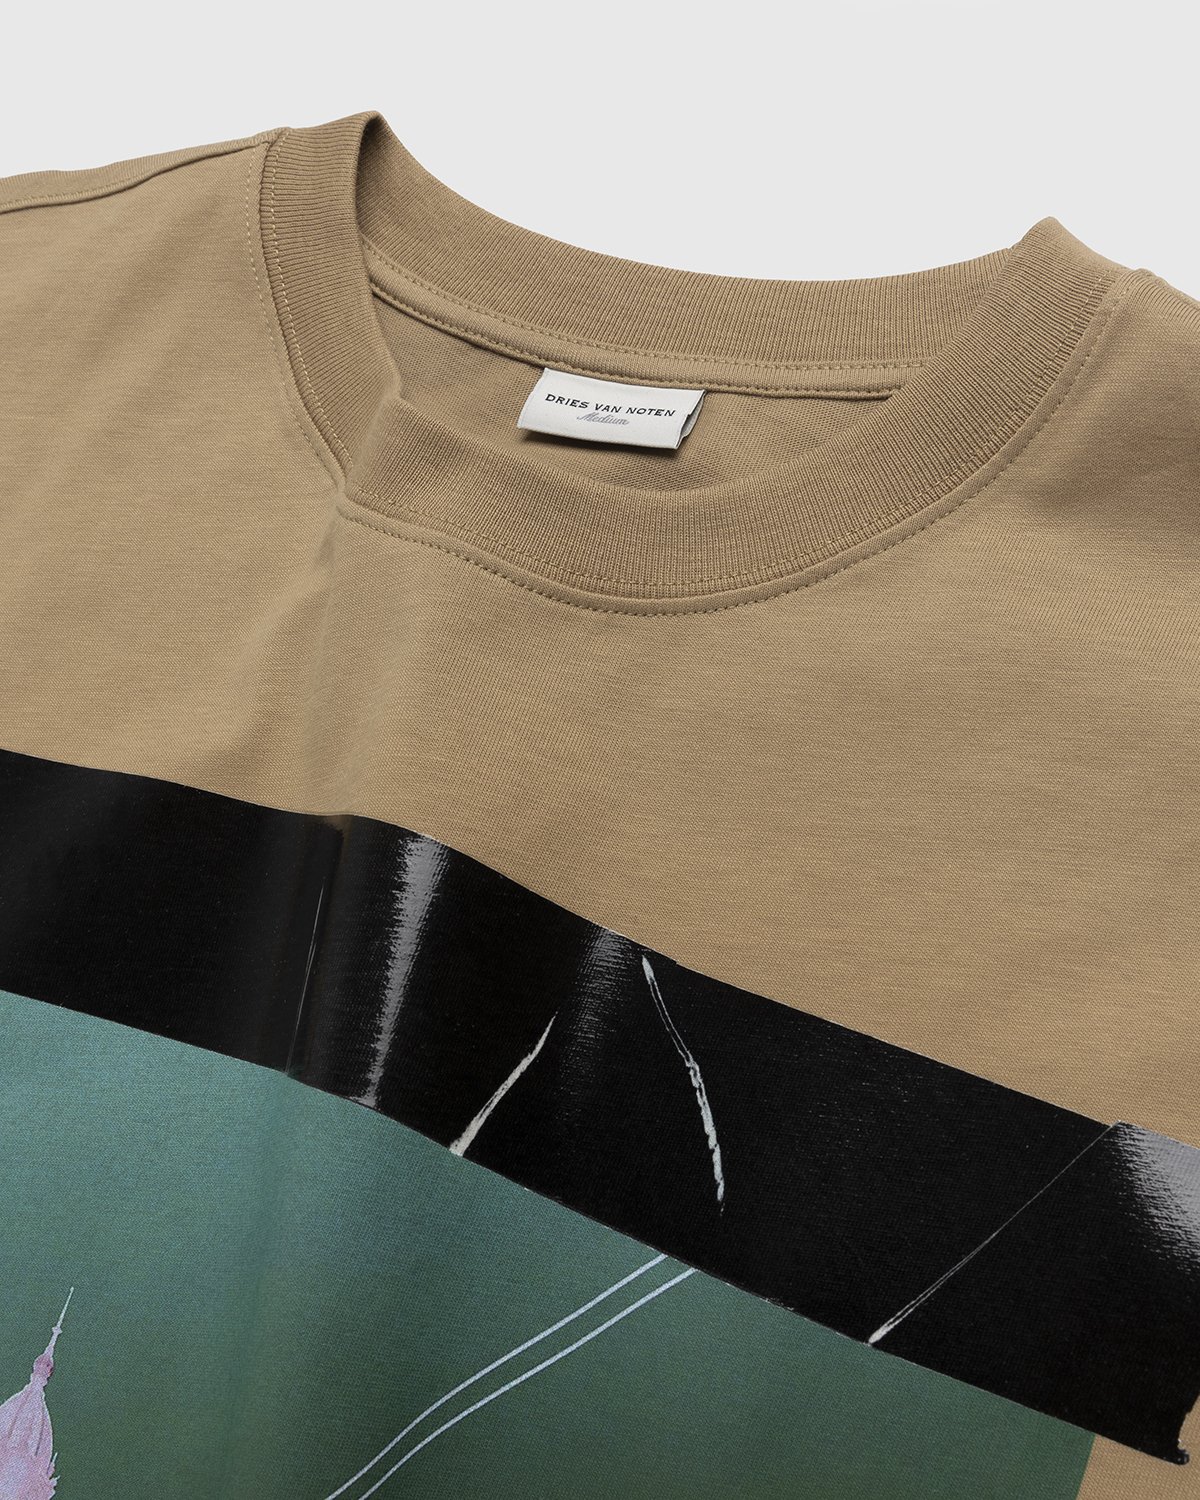 Dries van Noten - Heli Graphic T-Shirt Sand - Clothing - Beige - Image 3